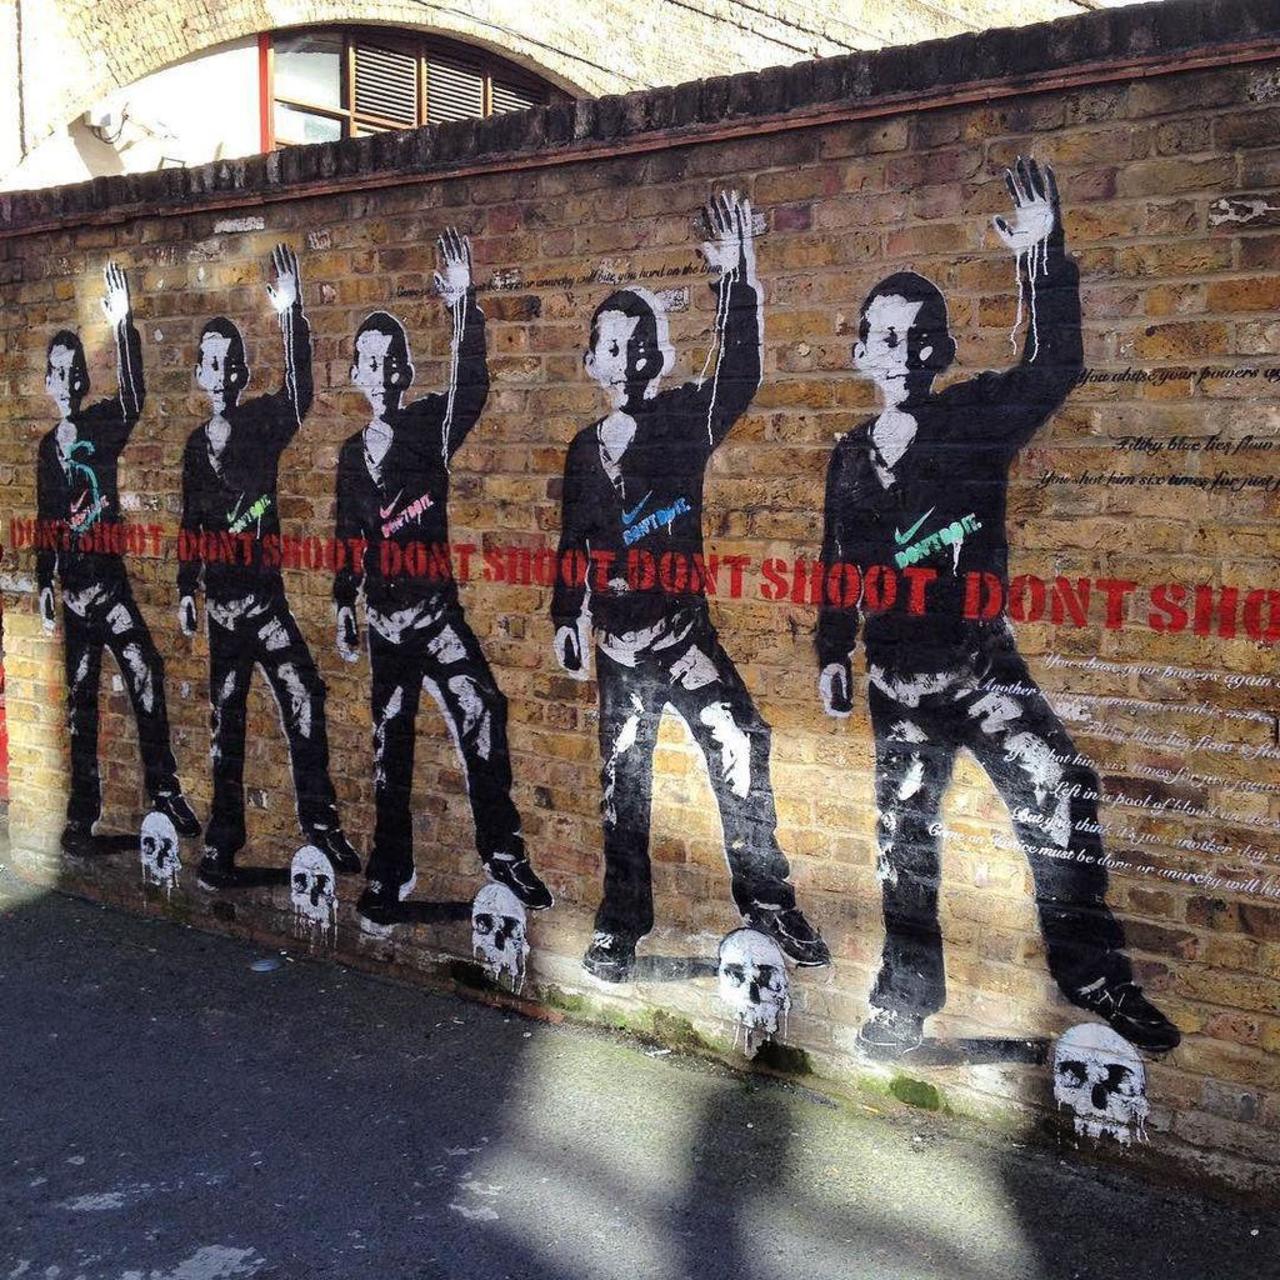 RT @StArtEverywhere: #streetart #streetartlondon #graffiti #london #thisislondon by isadarko http://t.co/LQStzz7naj